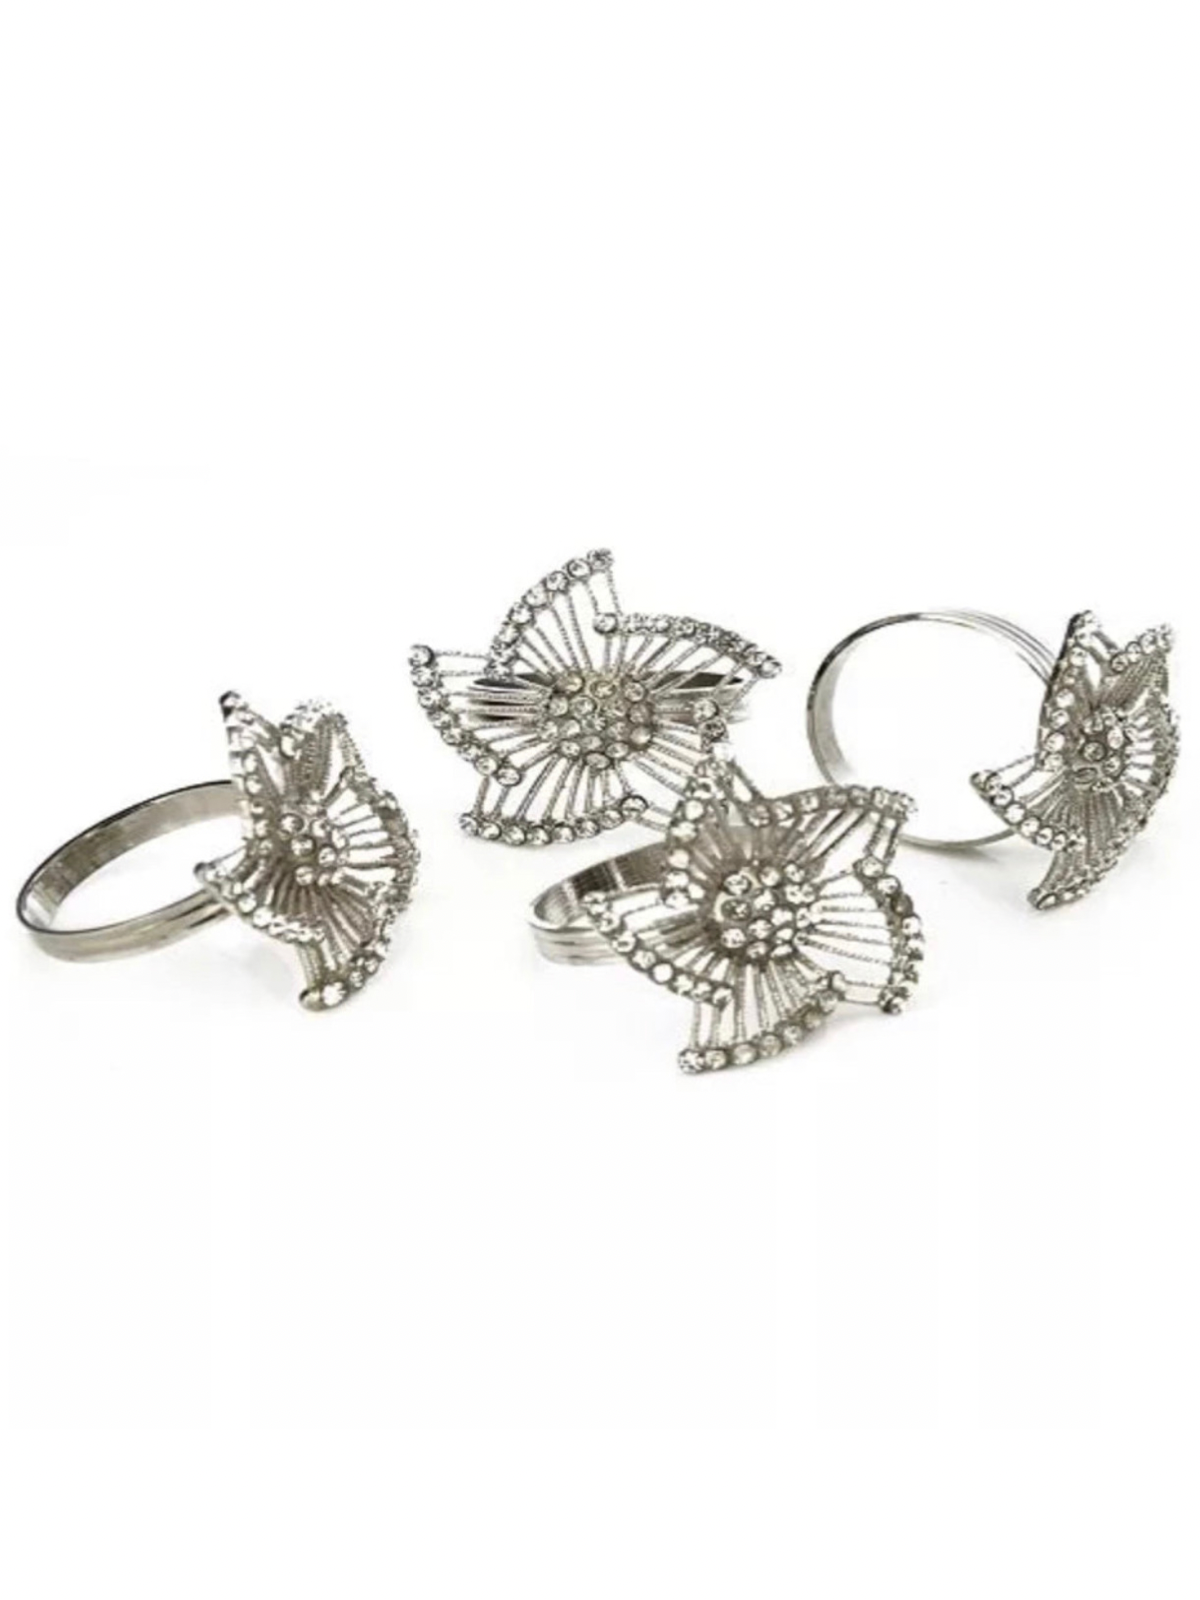 Set of 4 Silver Leaf Designed Napkin Rings sold by KYA Home Decor.